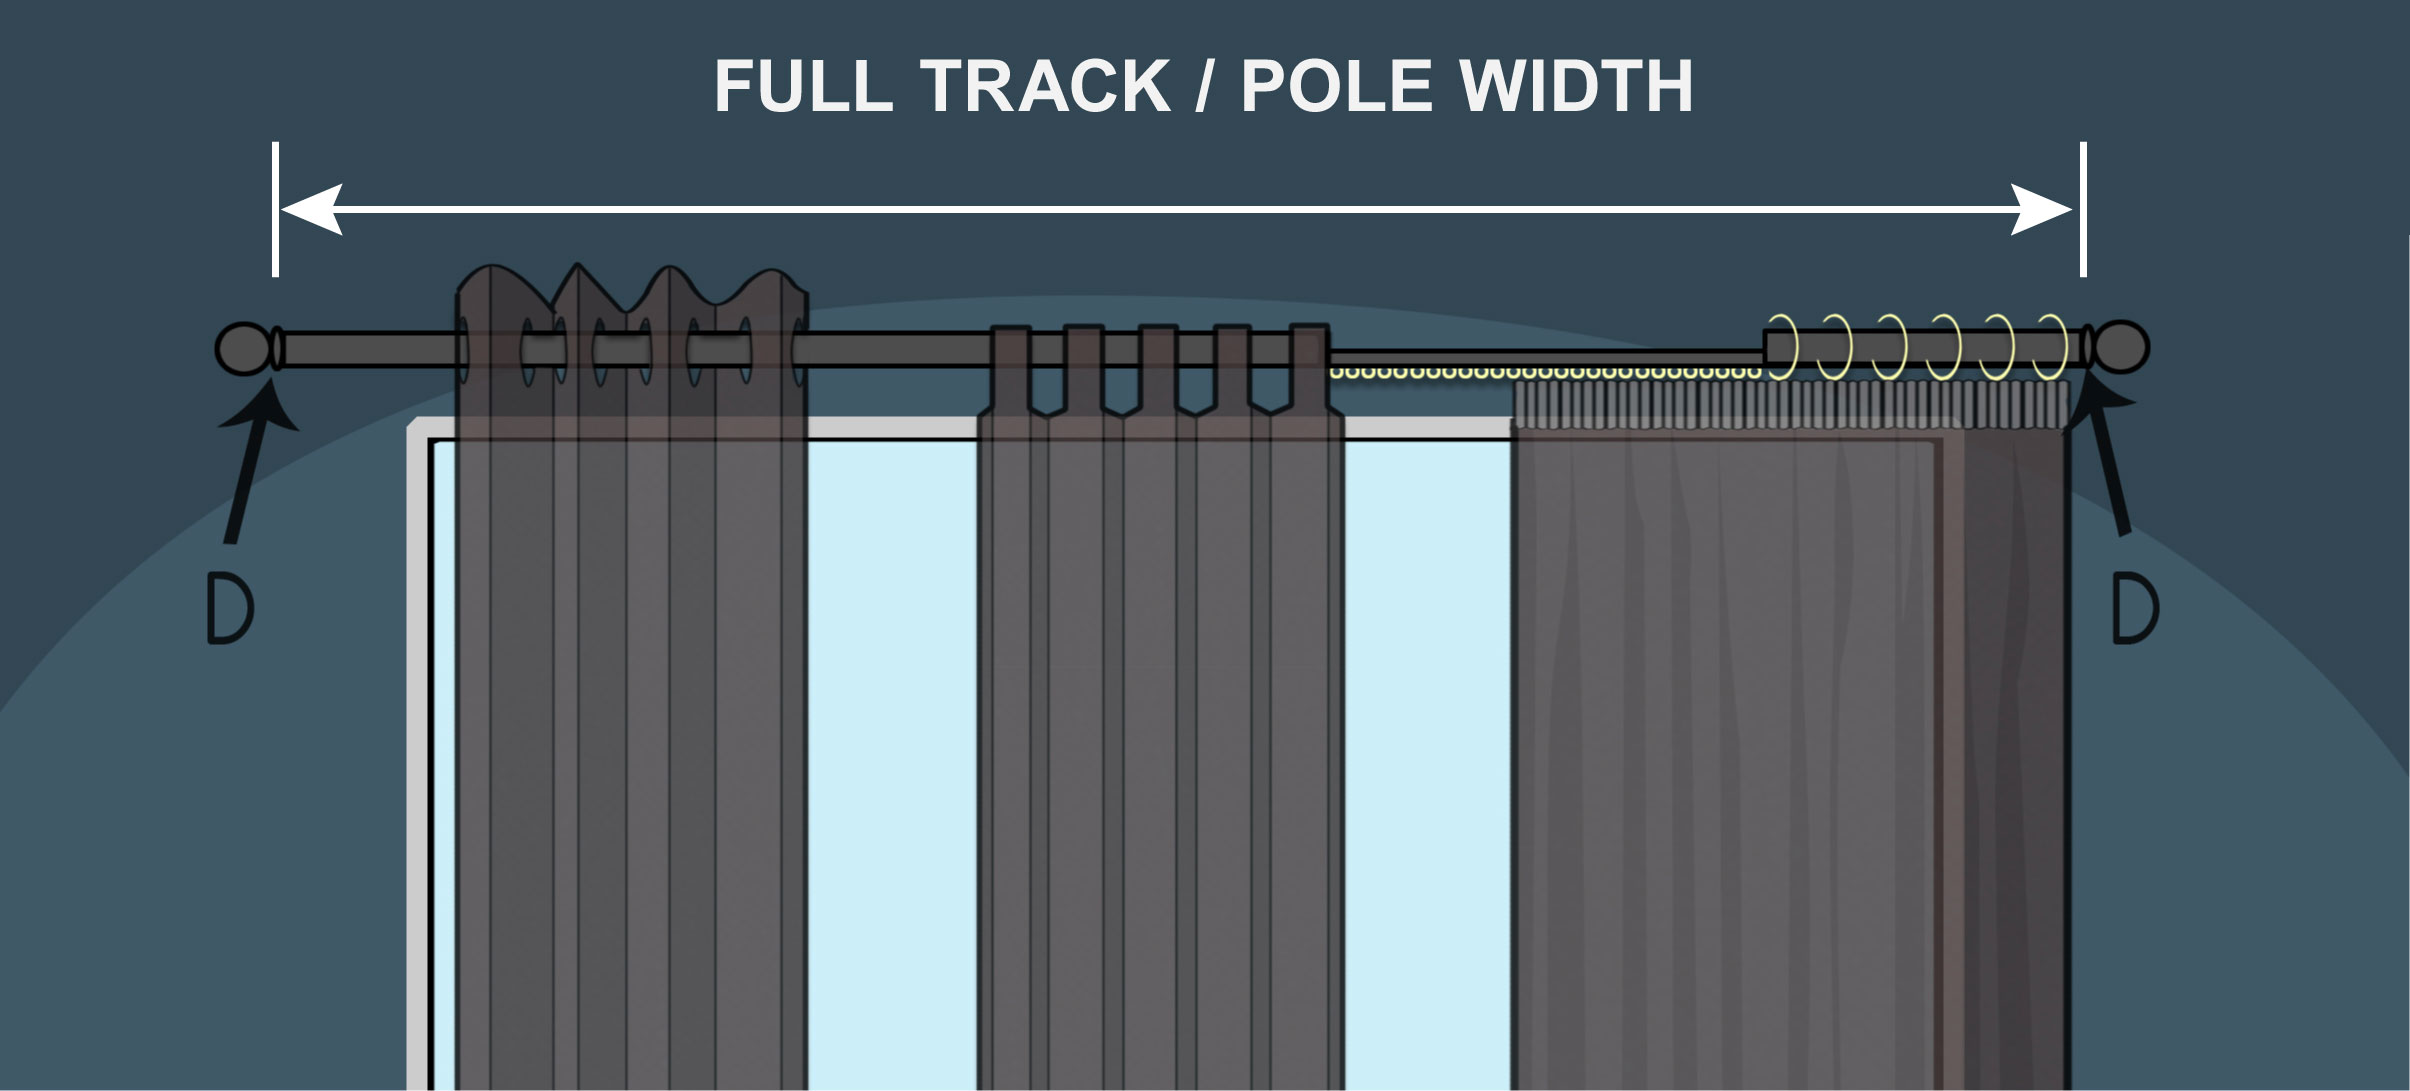 full track/pole width